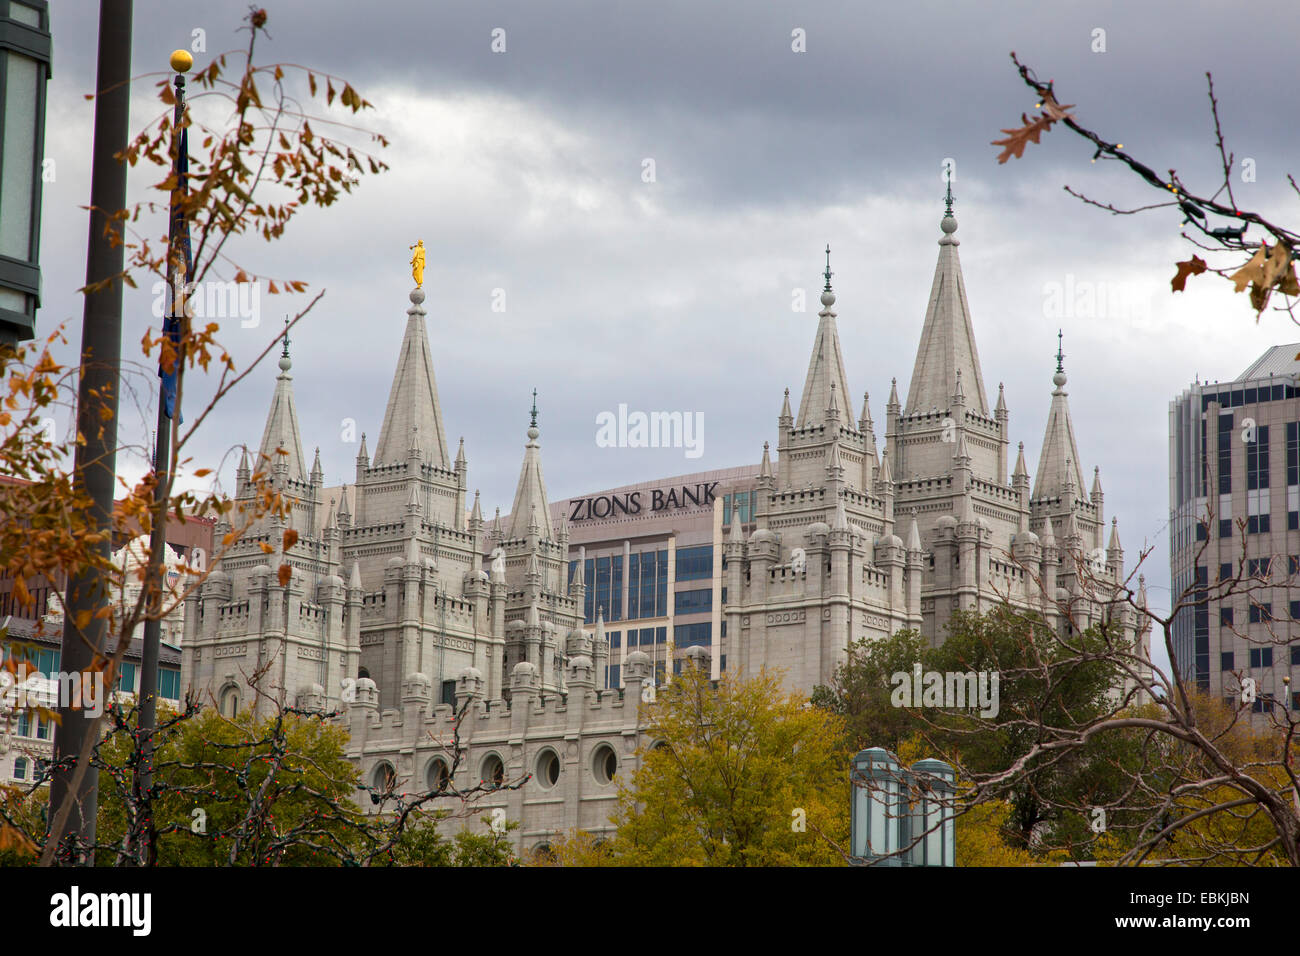 Salt Lake City, Utah - The Salt-Lake-Tempel der Kirche Jesu Christi der Heiligen der letzten Tag (Mormonen), neben Zions Bank. Stockfoto